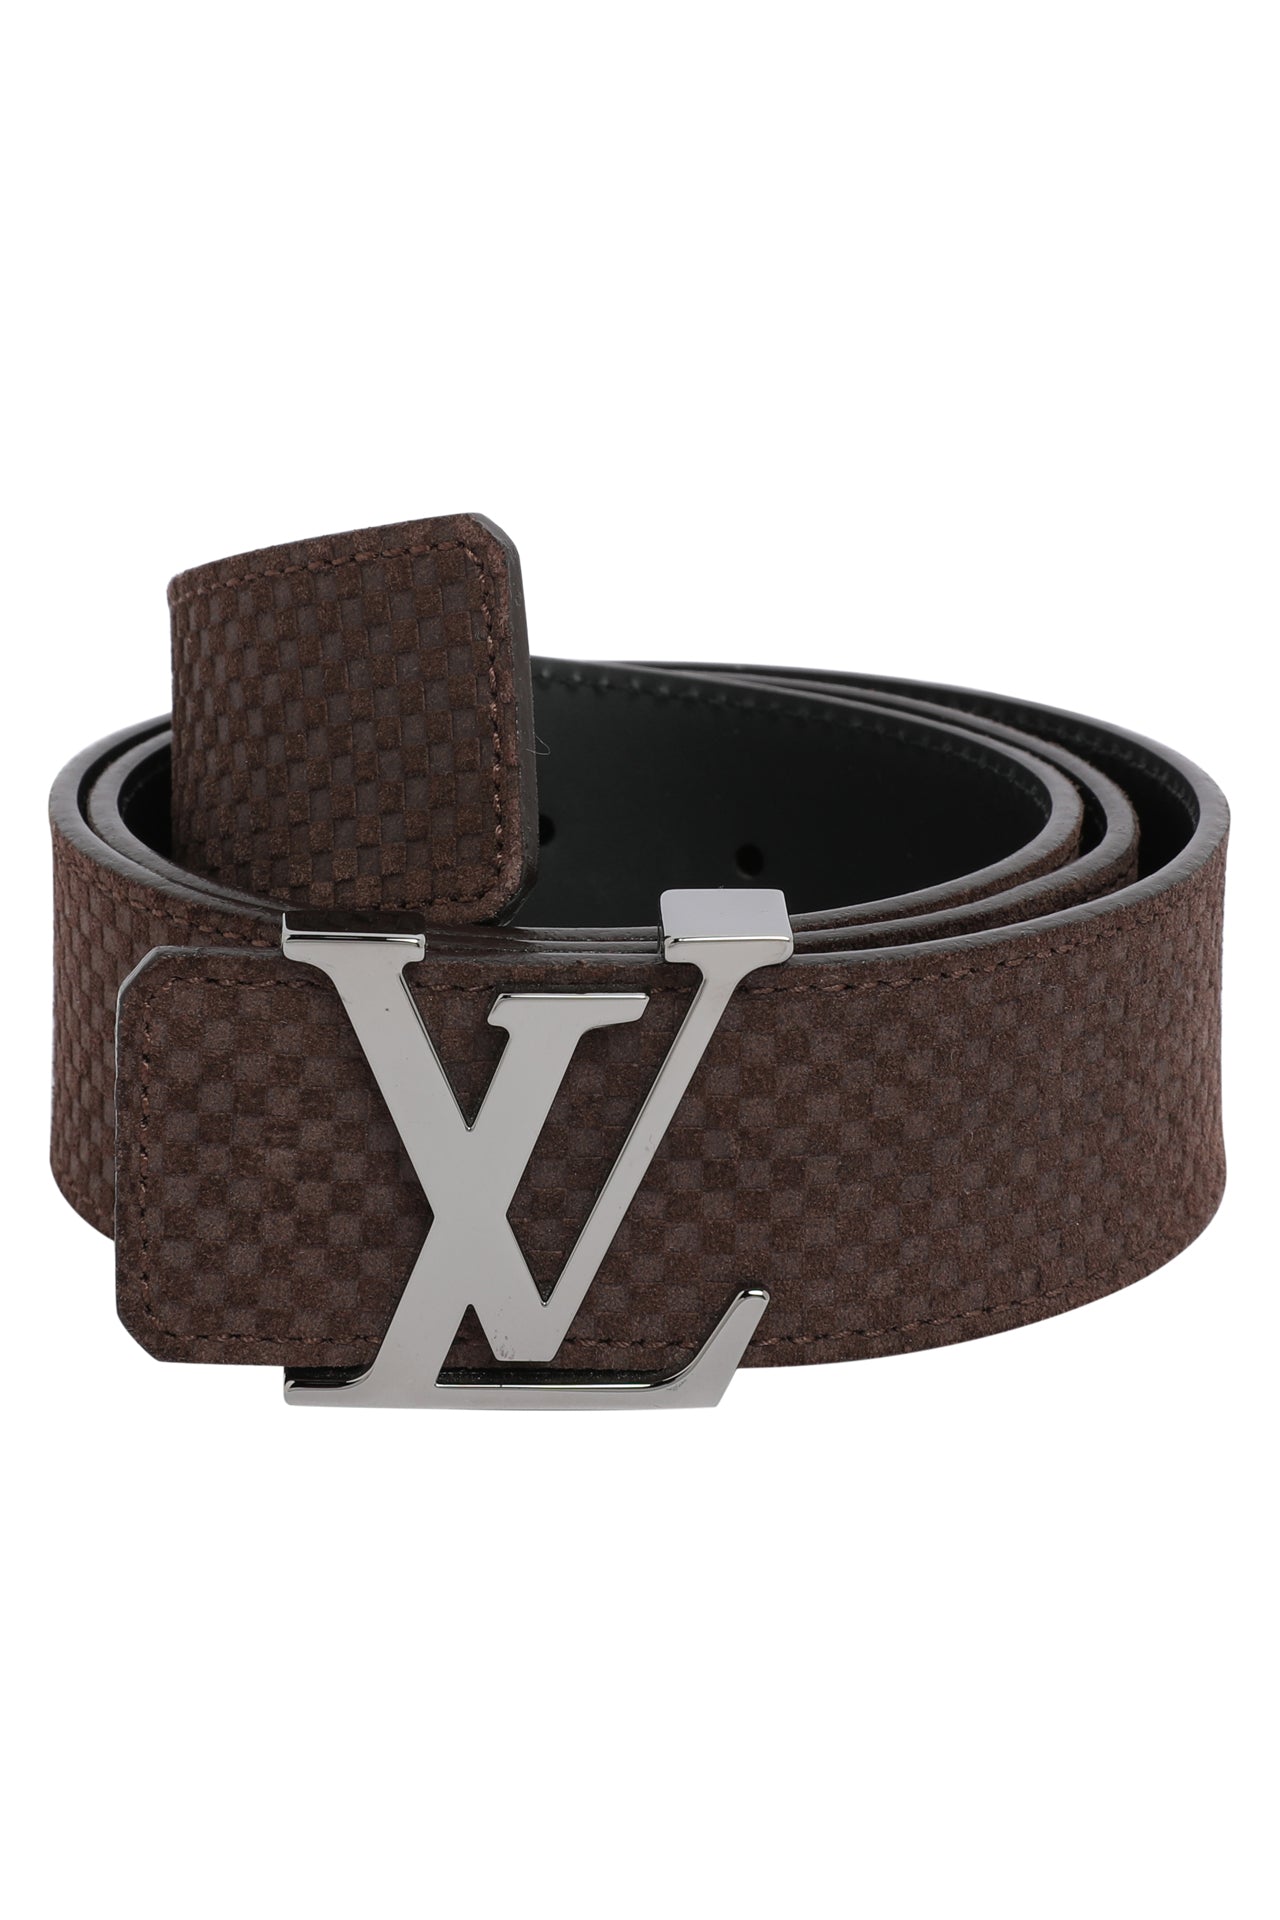 Louis Vuitton Red Leather LV Initiales Belt Size 85CM Louis